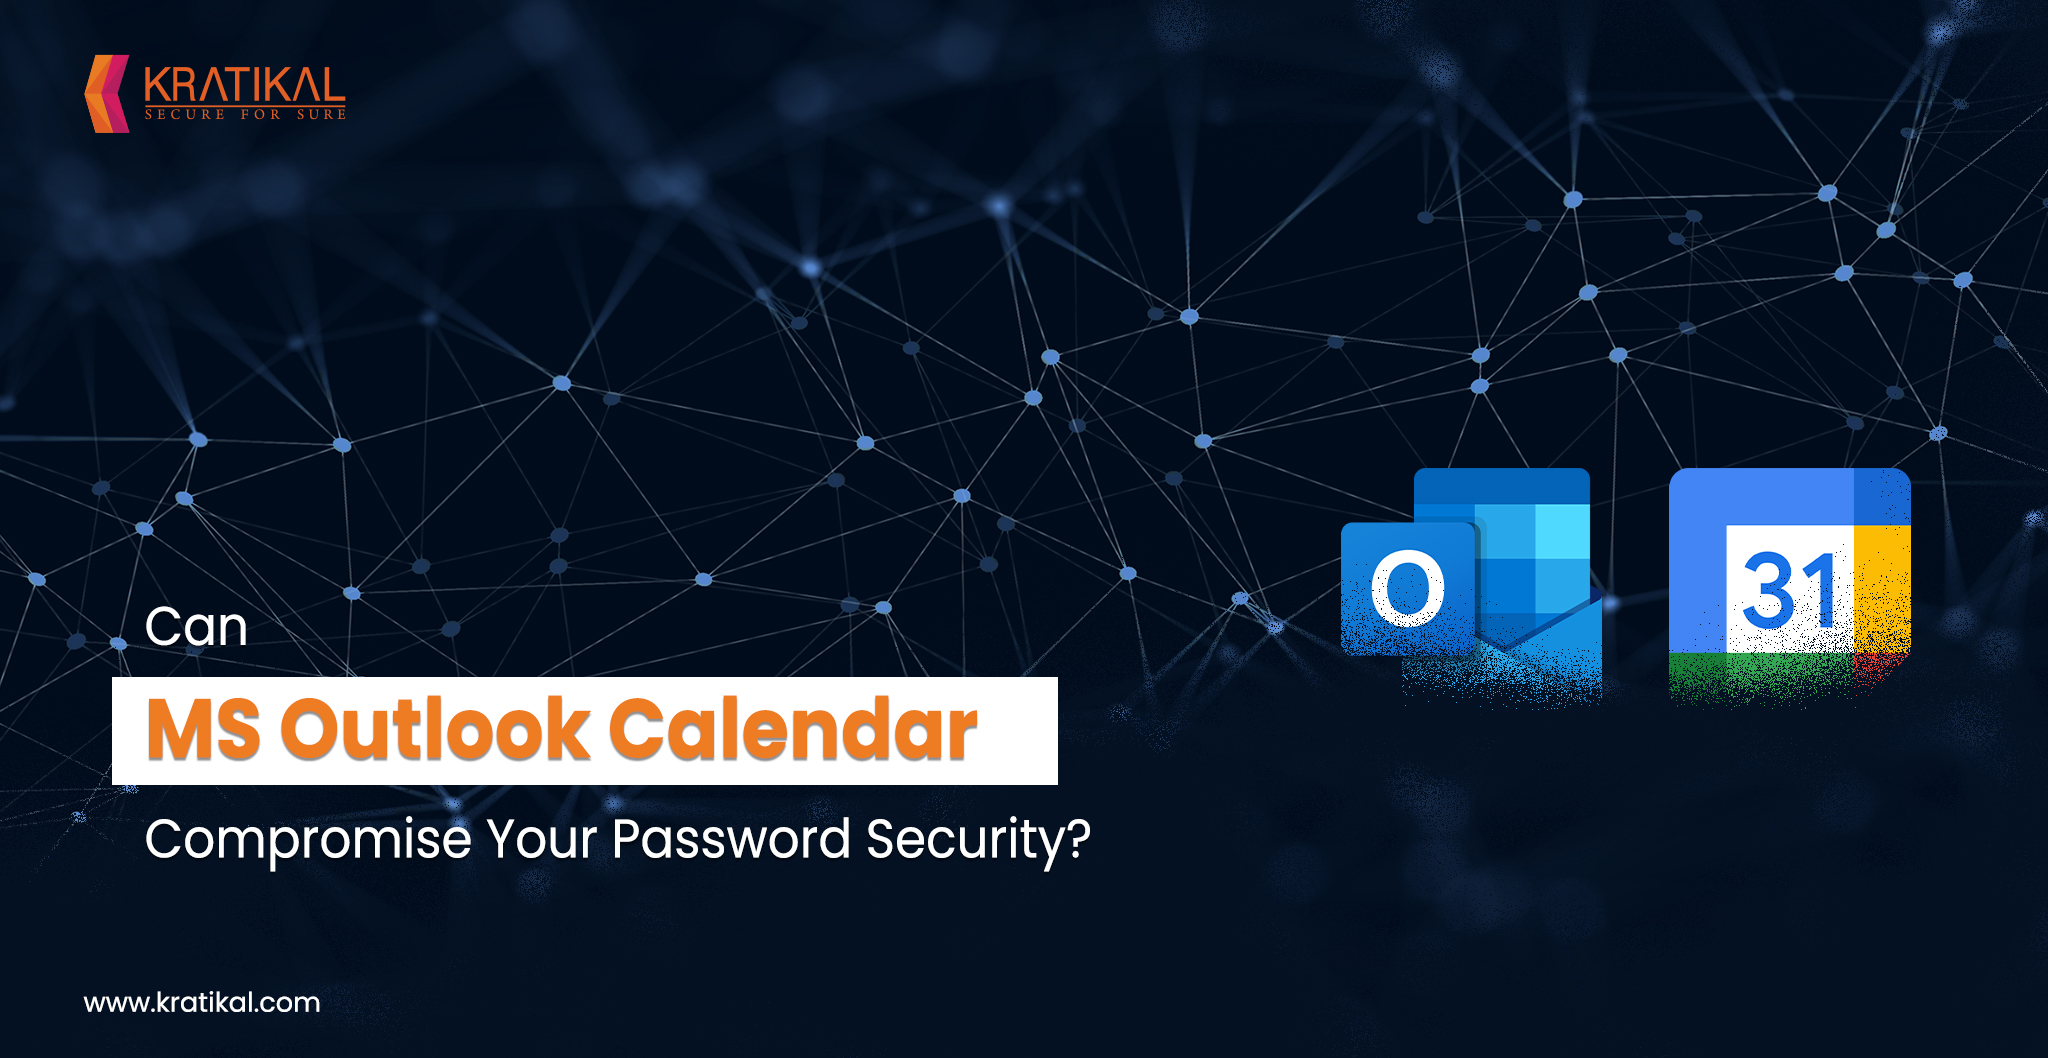 Can an MS Outlook Calendar leak your Password?